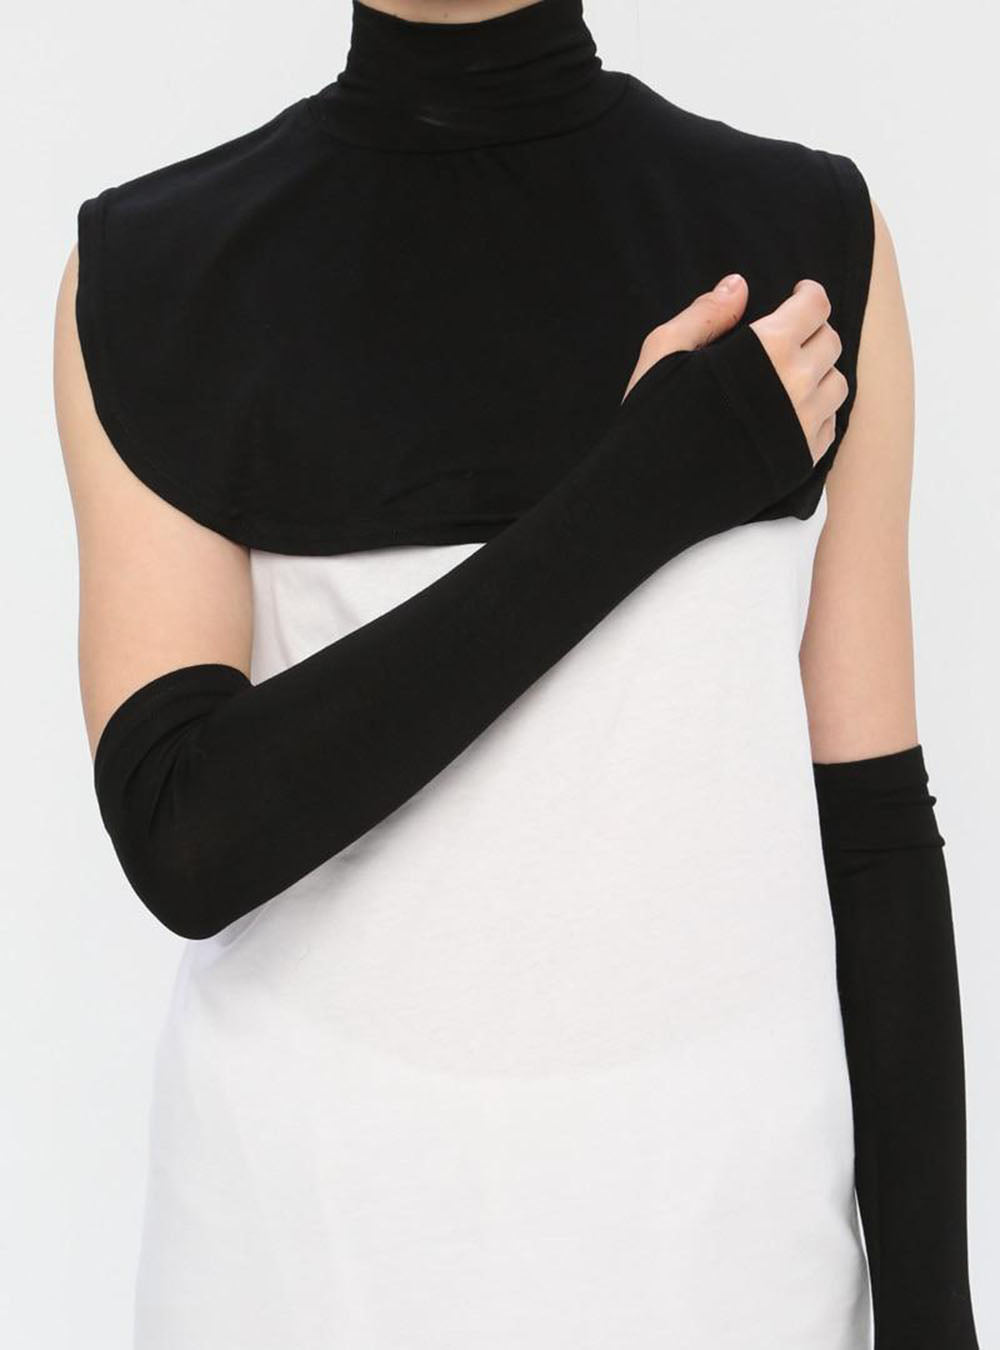 Chic Shoulder Drape with High Neckline | White